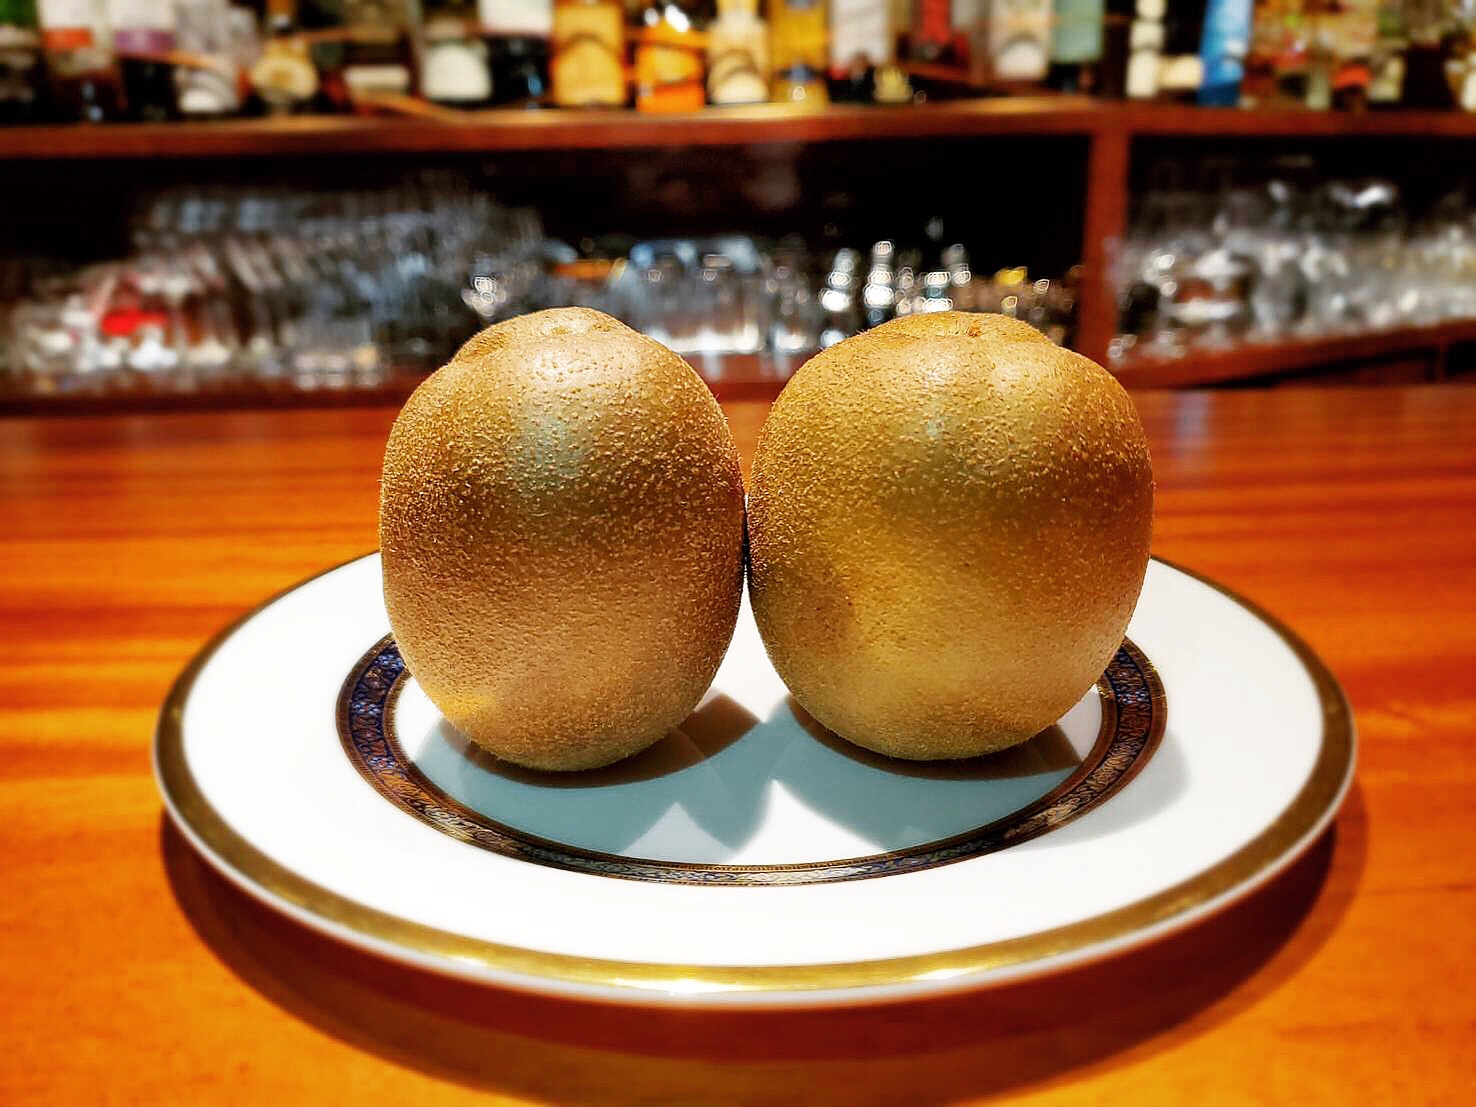 Kiwi アップルキウイ 魁蜜 かいみつ 形がりんごのような 生産数が少なくとても貴重なキウイフルーツ 福岡県八女産 Bartetu バーテツ